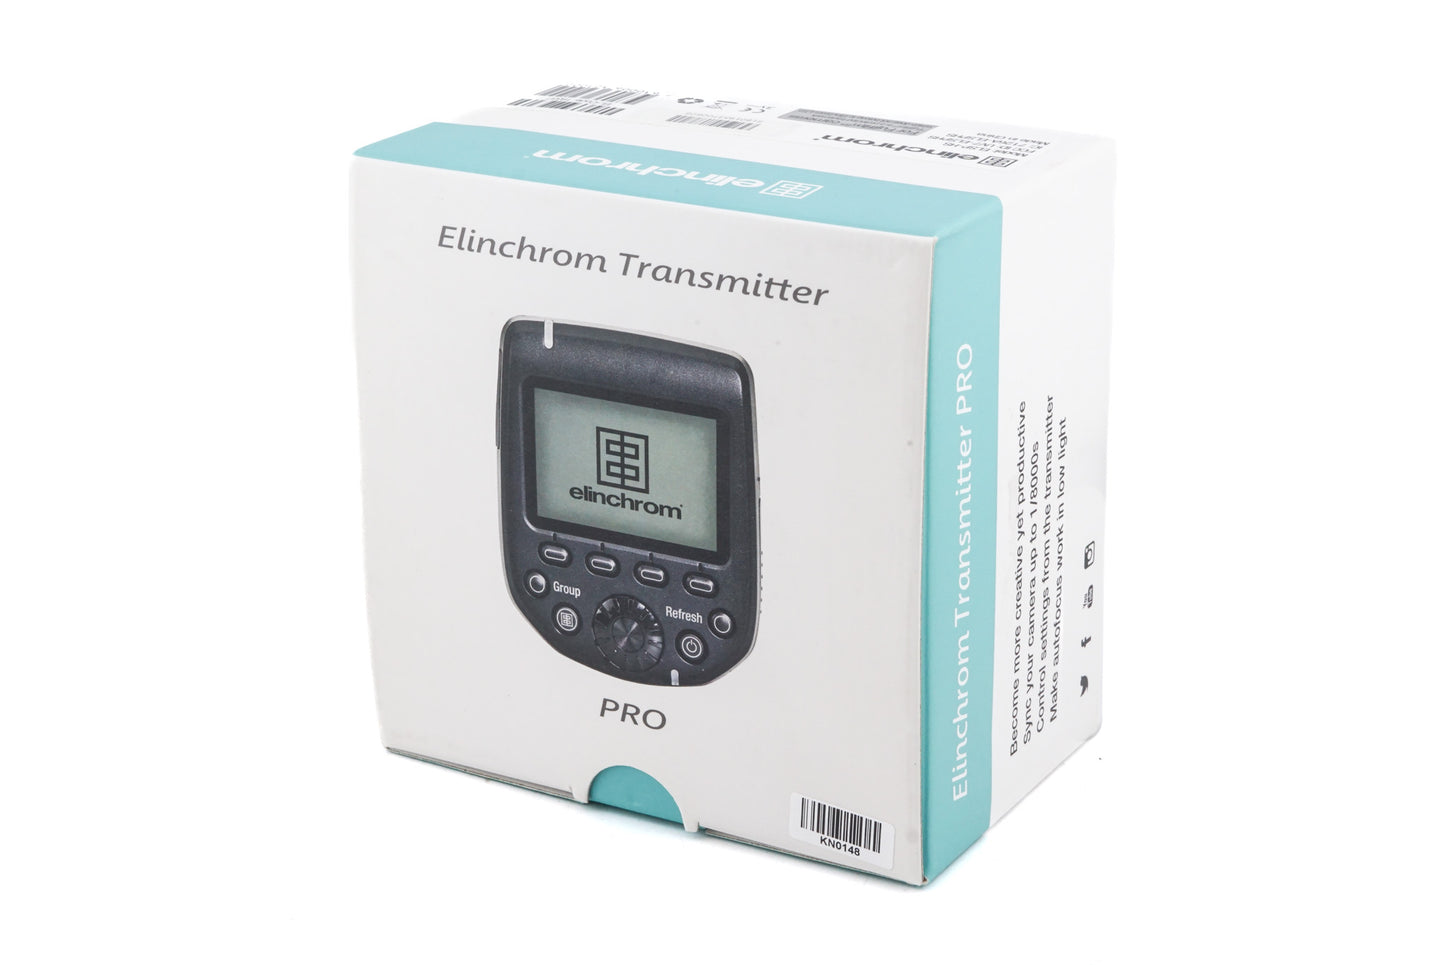 Elinchrom Transmitter Pro